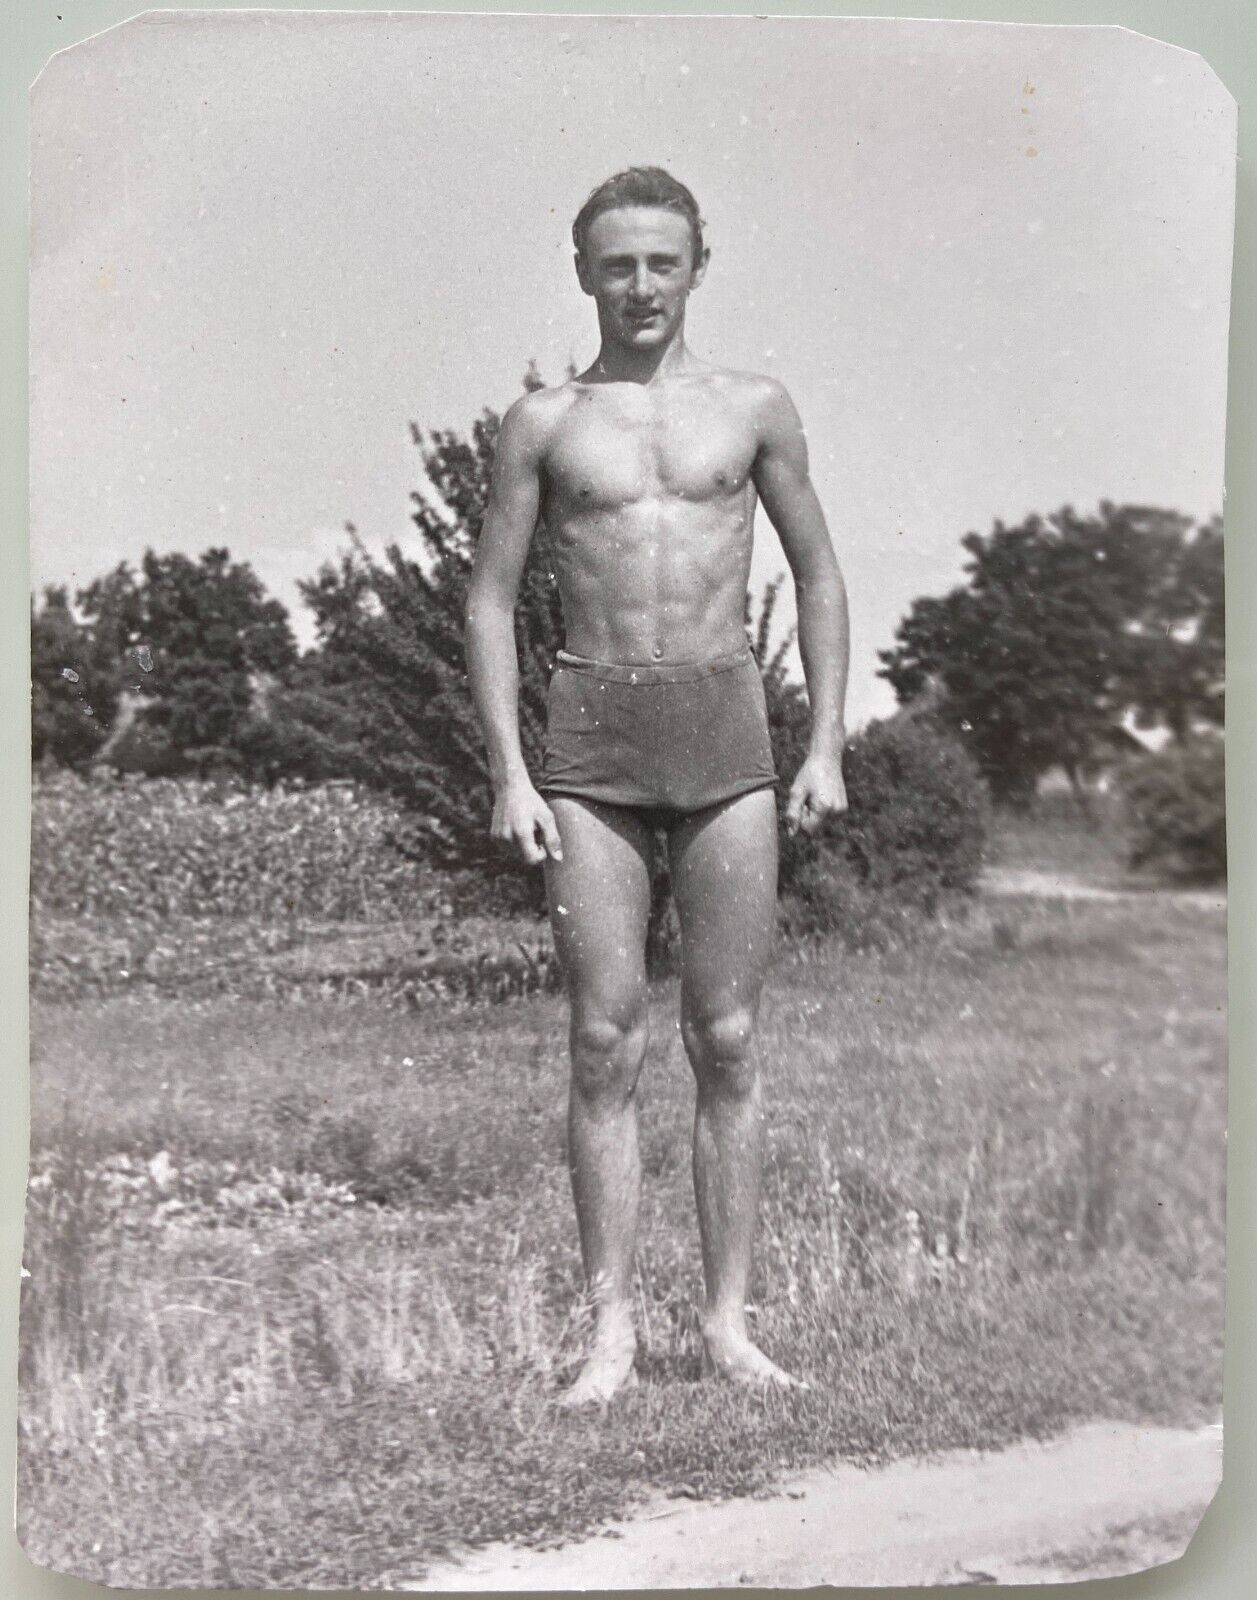 Shirtless Man Physique Beefcake Handsome Affectionate Gay Interest Vintage Photo